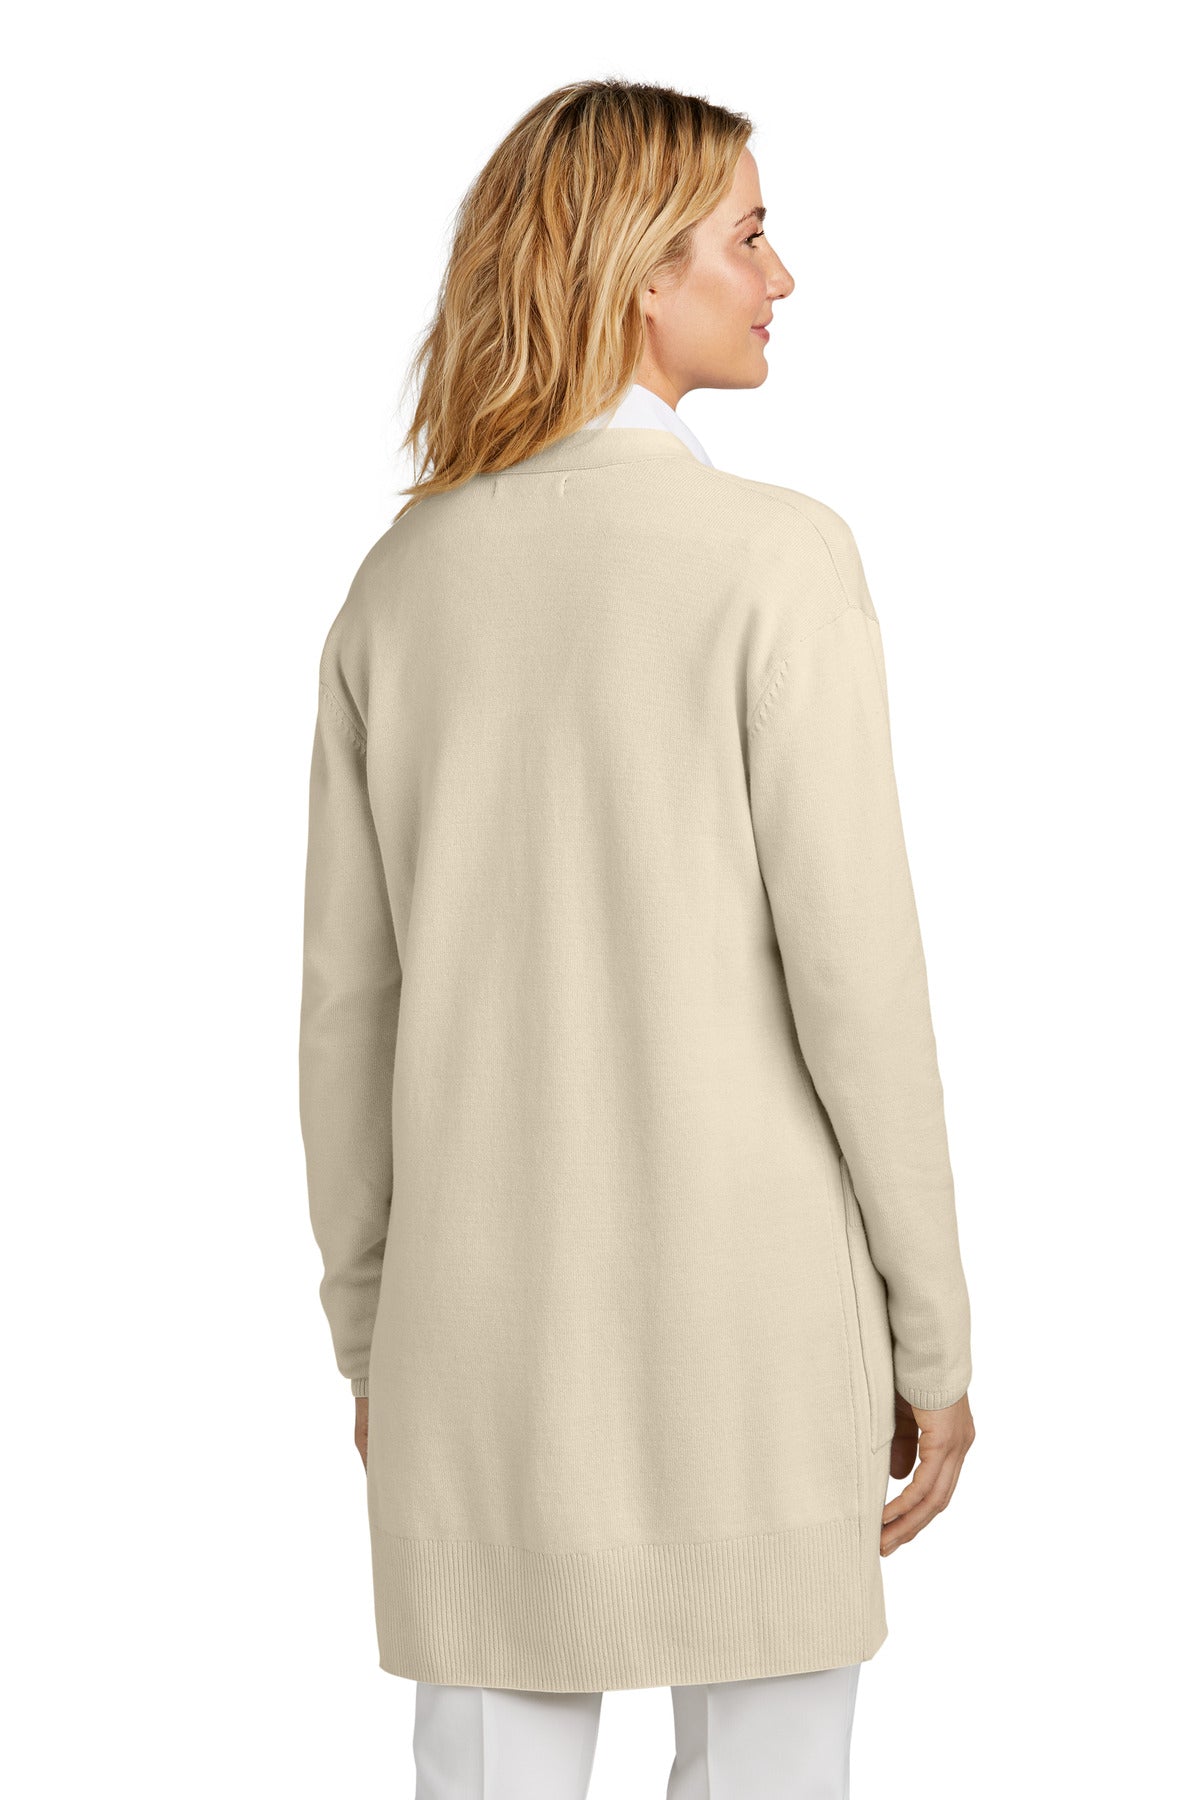 Mercer+Mettle™ Women's Open Front Cardigan Sweater MM3023 - DFW Impression